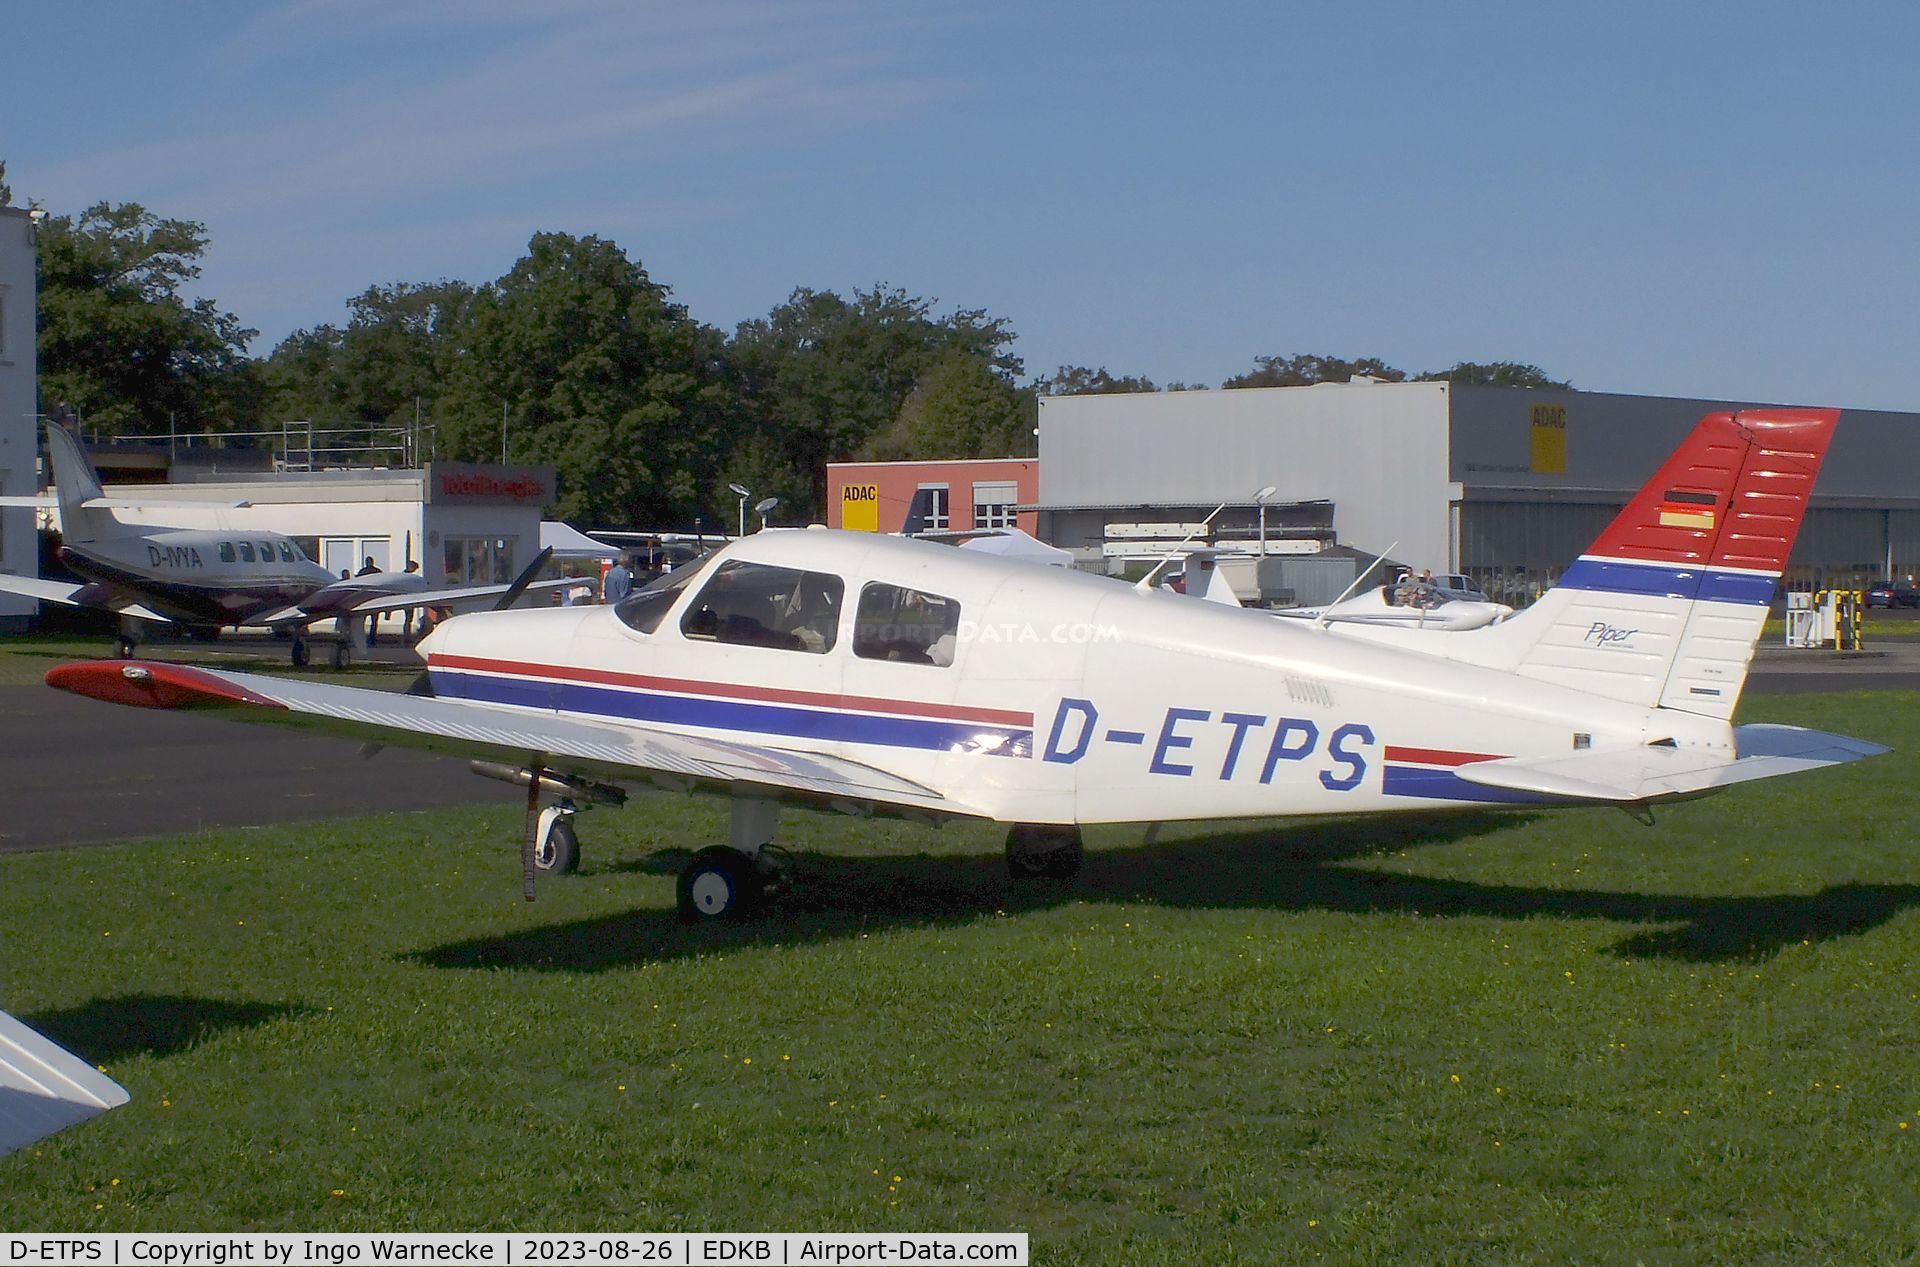 D-ETPS, 1994 Piper PA-28-161 C/N 2841364, Piper PA-28-161 Cadet at Bonn-Hangelar airfield during the Grumman Fly-in 2023